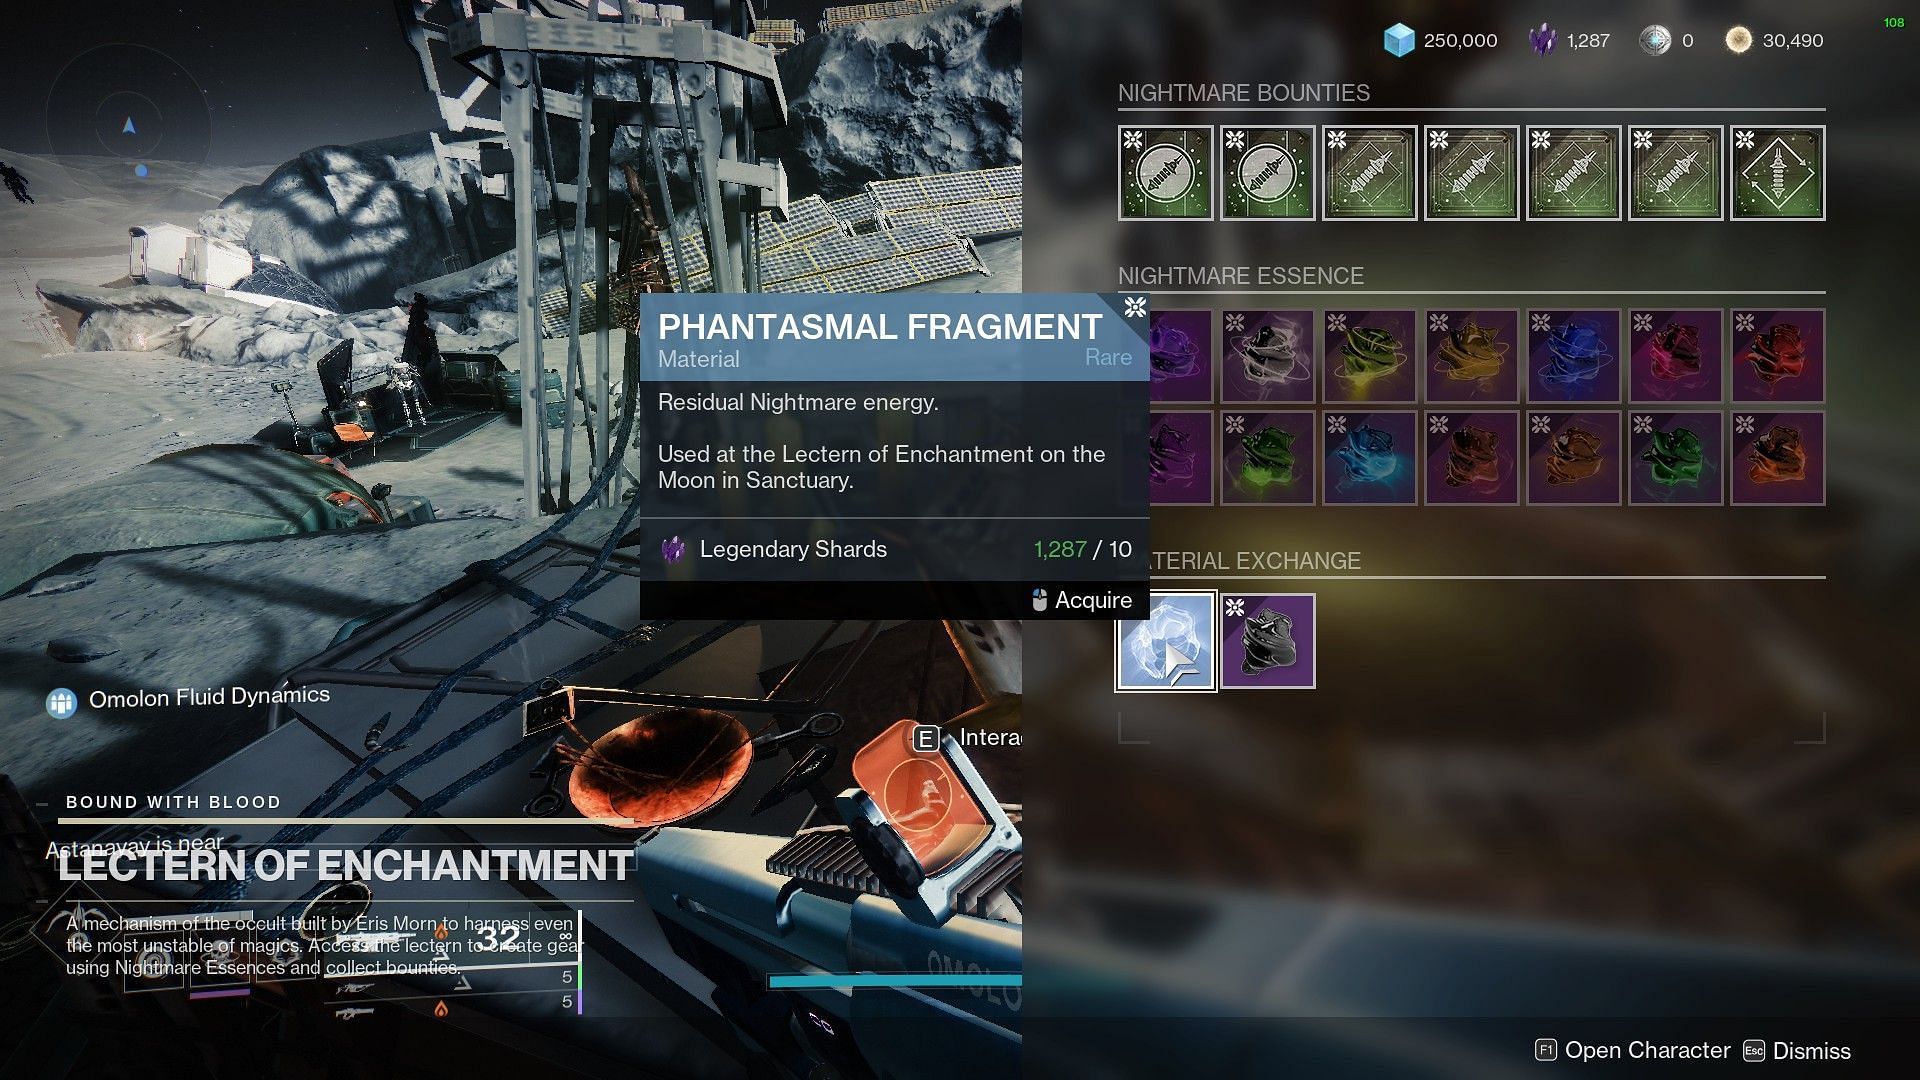 Phantasmal Fragment (Image via Destiny 2)